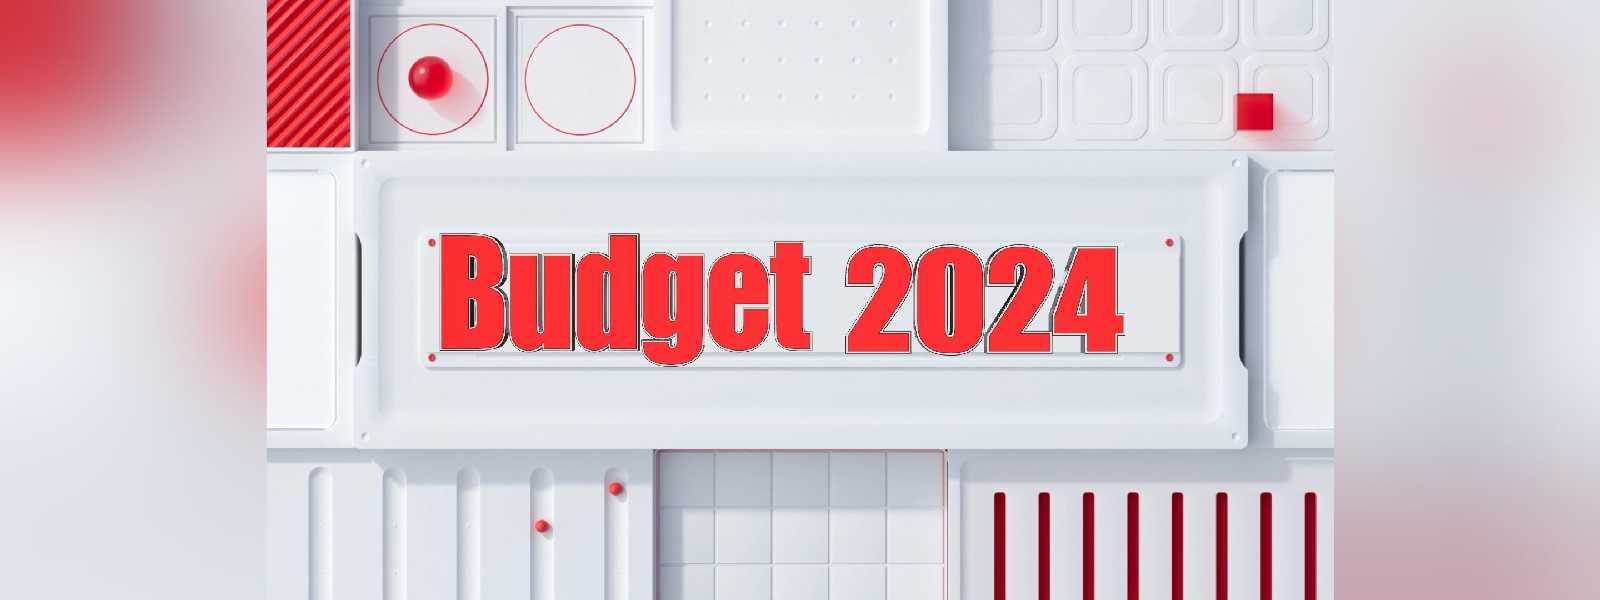 Live Blog Budget 2024 Live updates & Live Stream